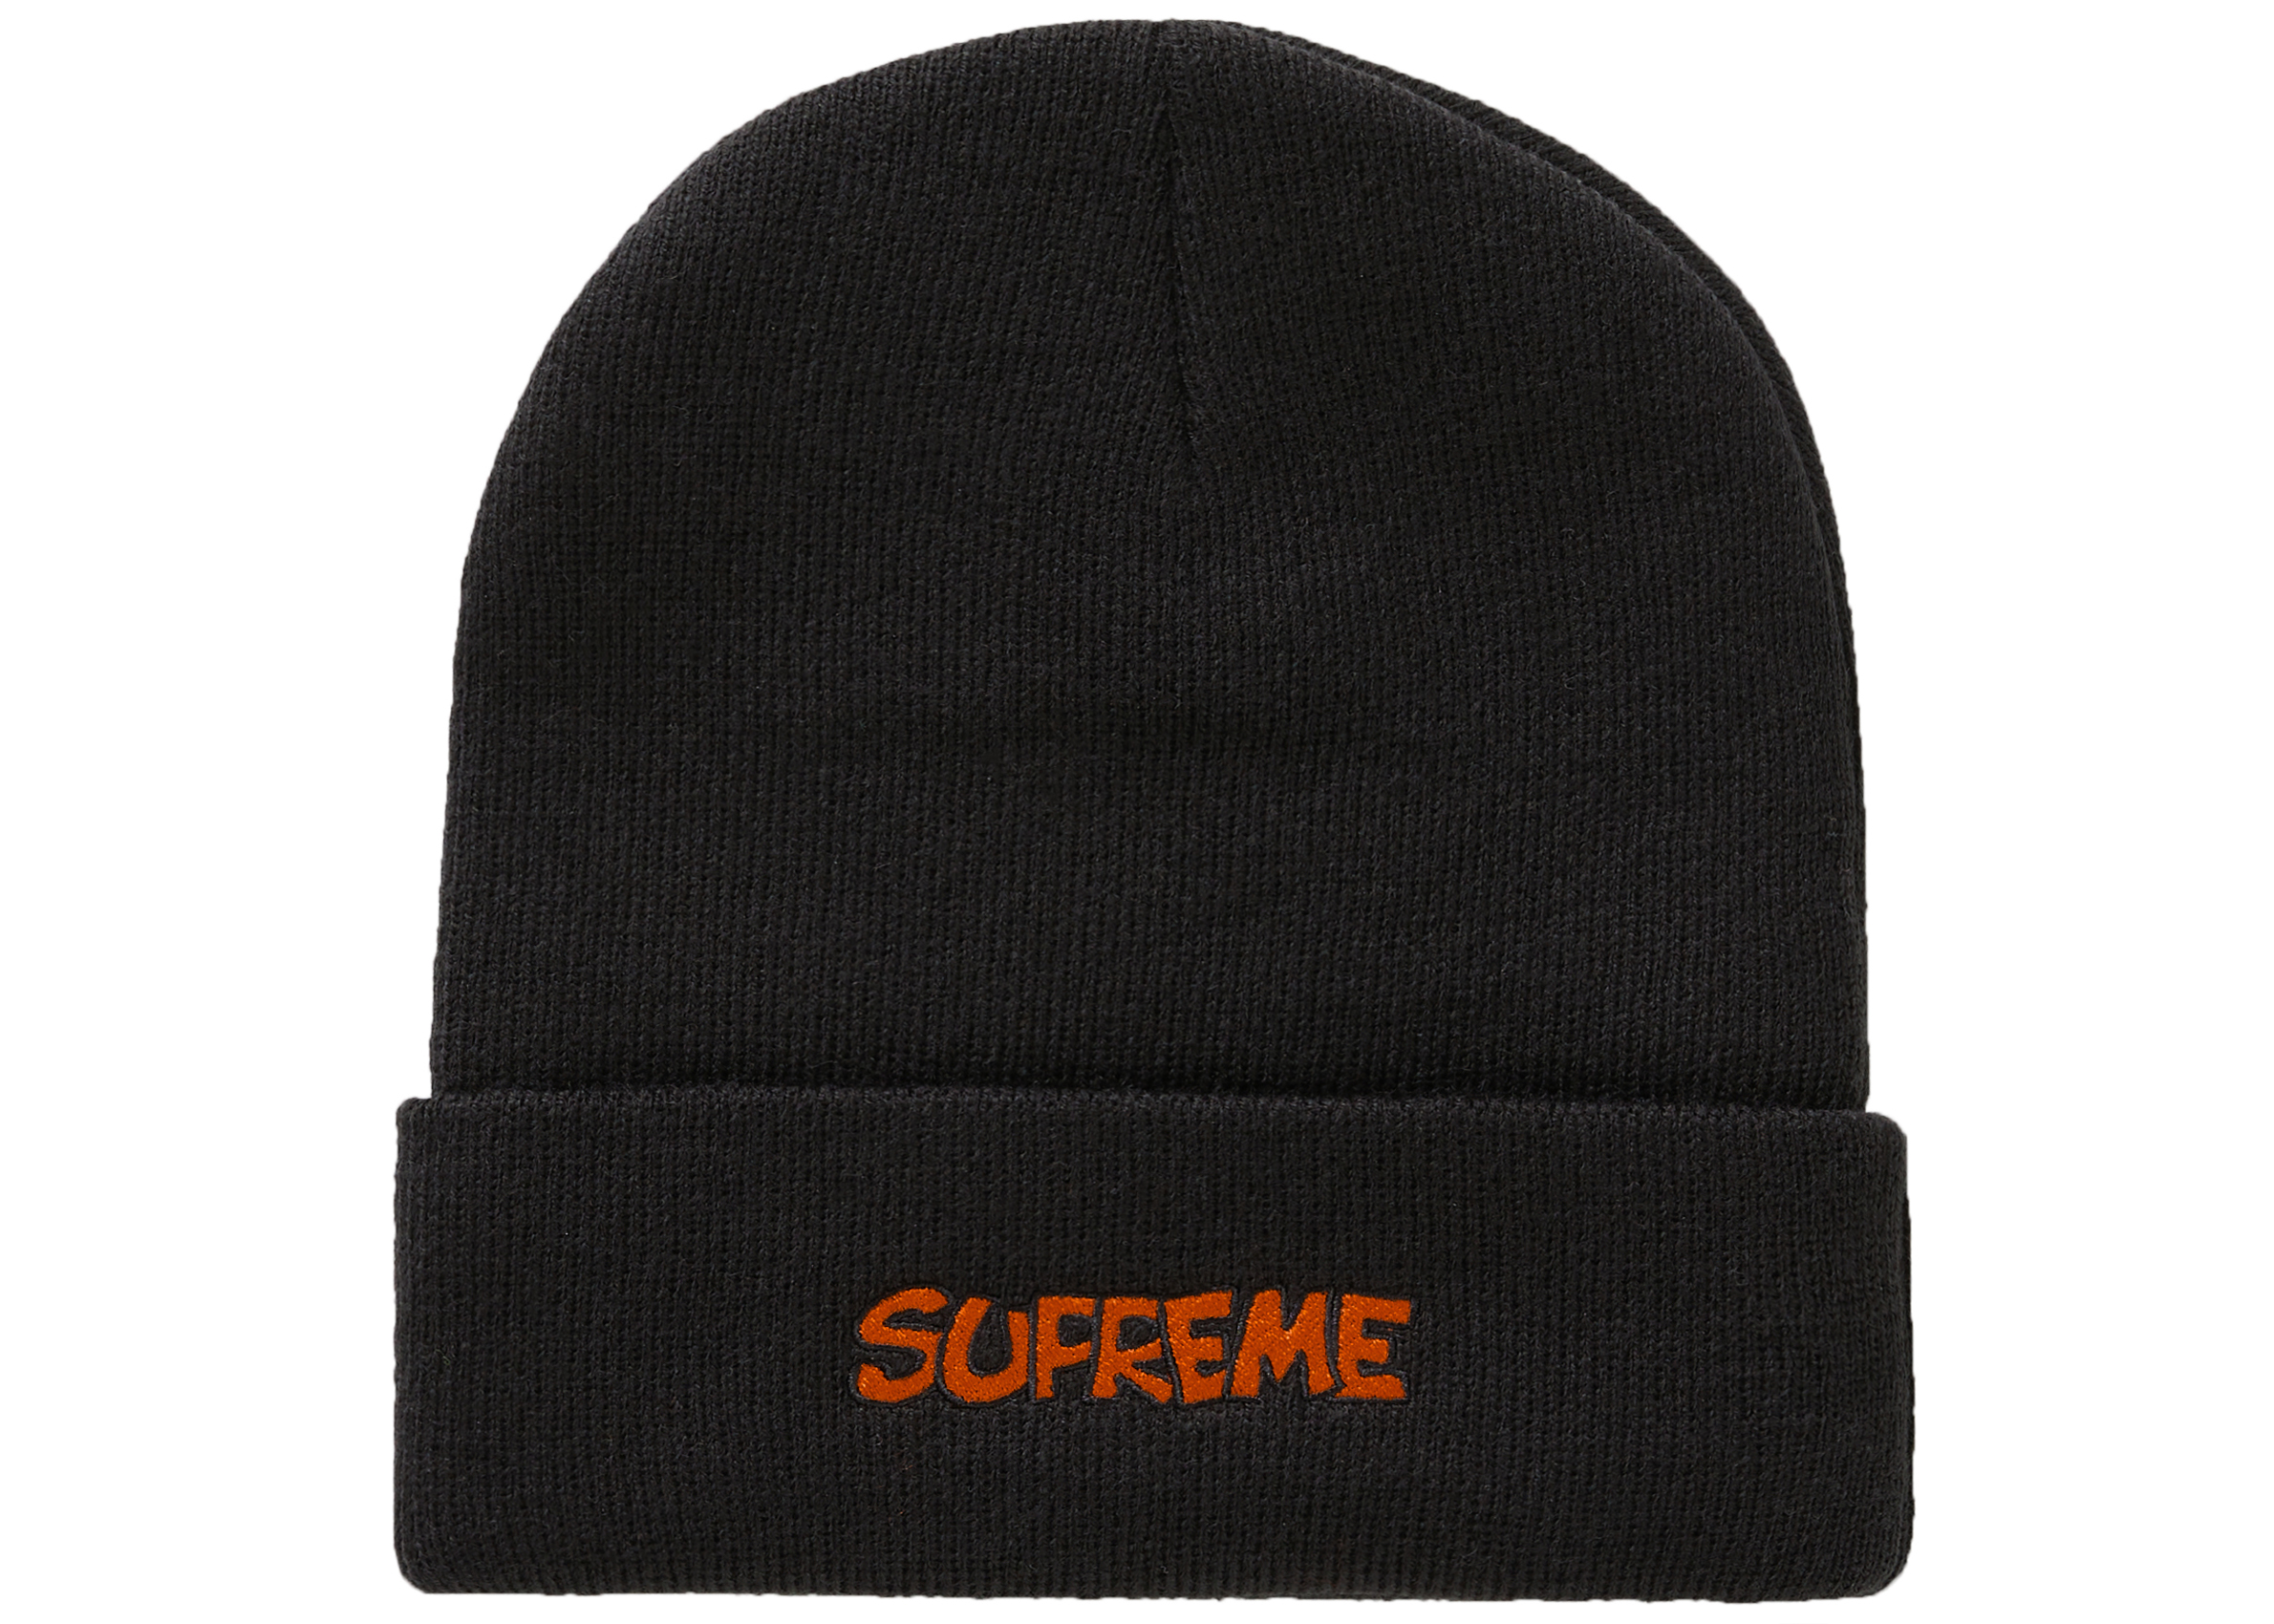 Supreme Smurfs Beanie Black - FW20 - GB